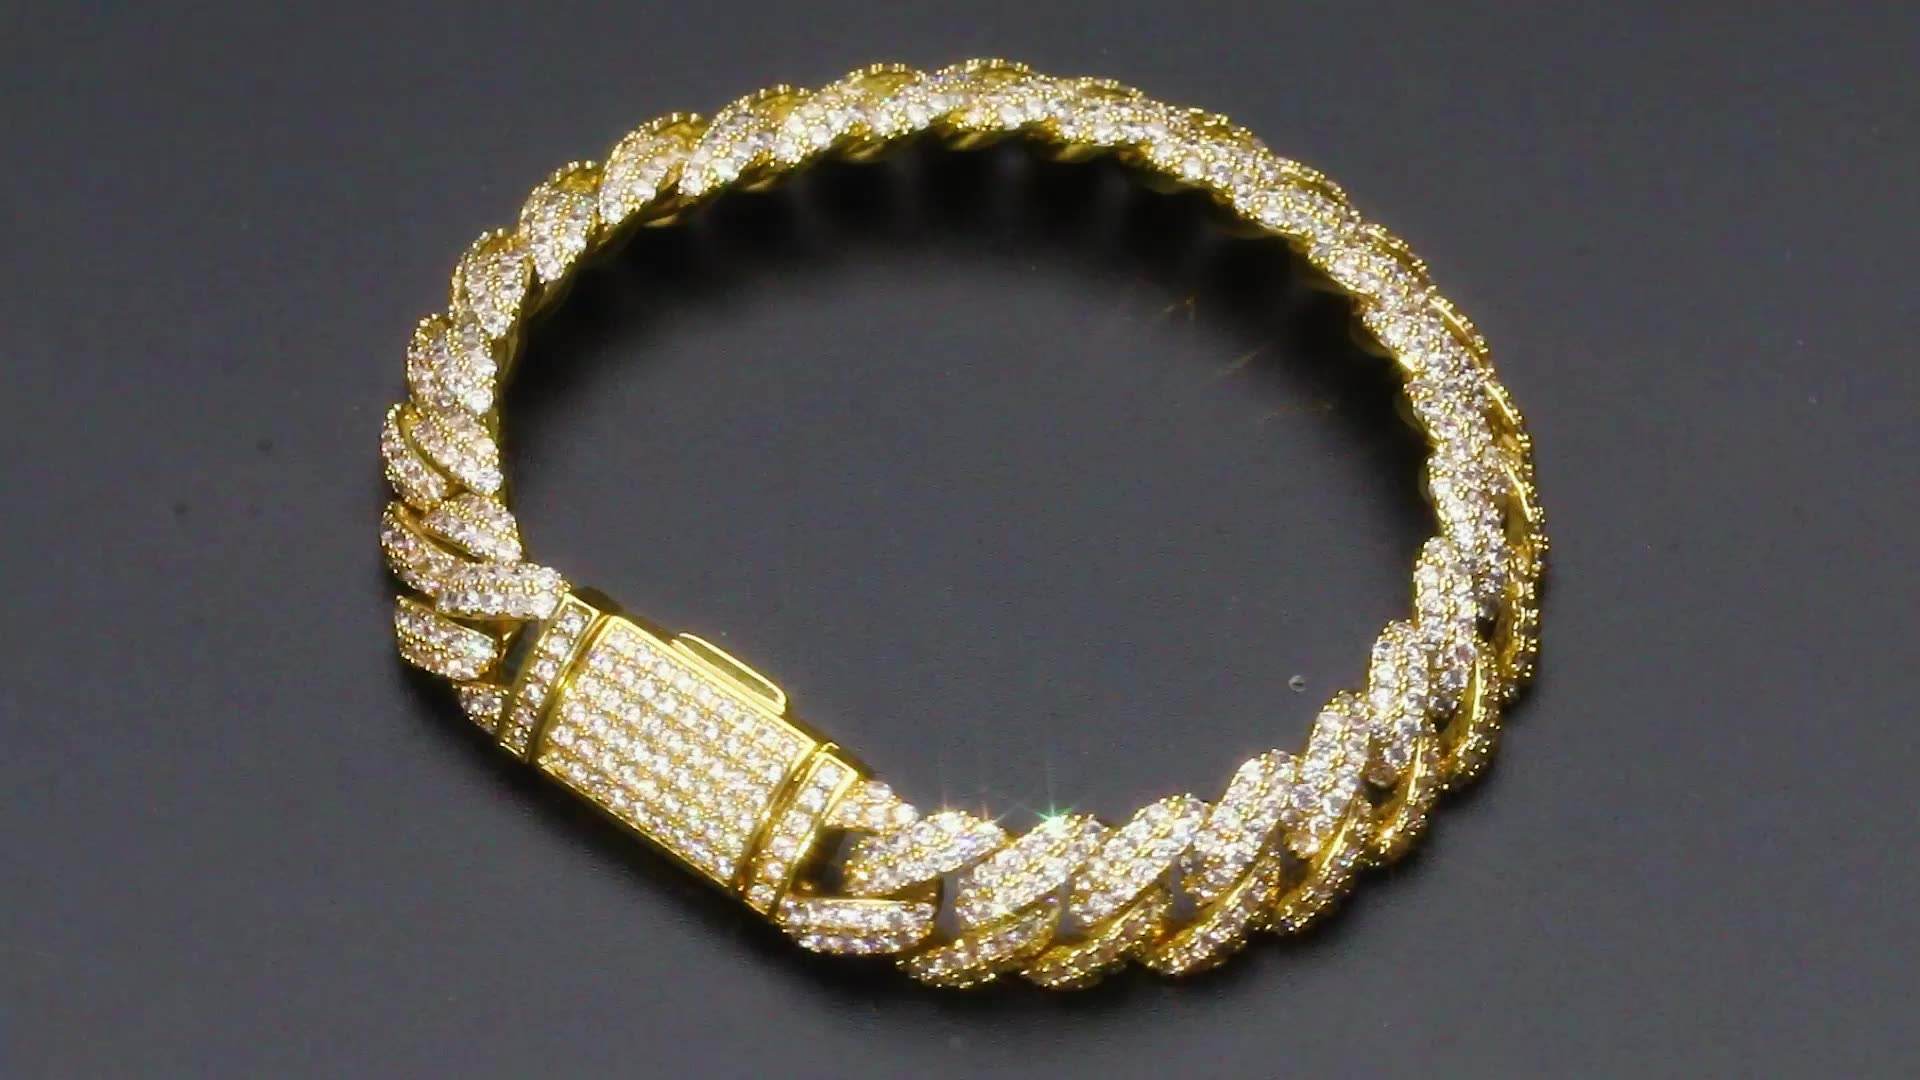 Silver Oxidized Plated Twisted Chain Flower Design Fashion Bracelet Men's  Jewelry - Gem O Sparkle